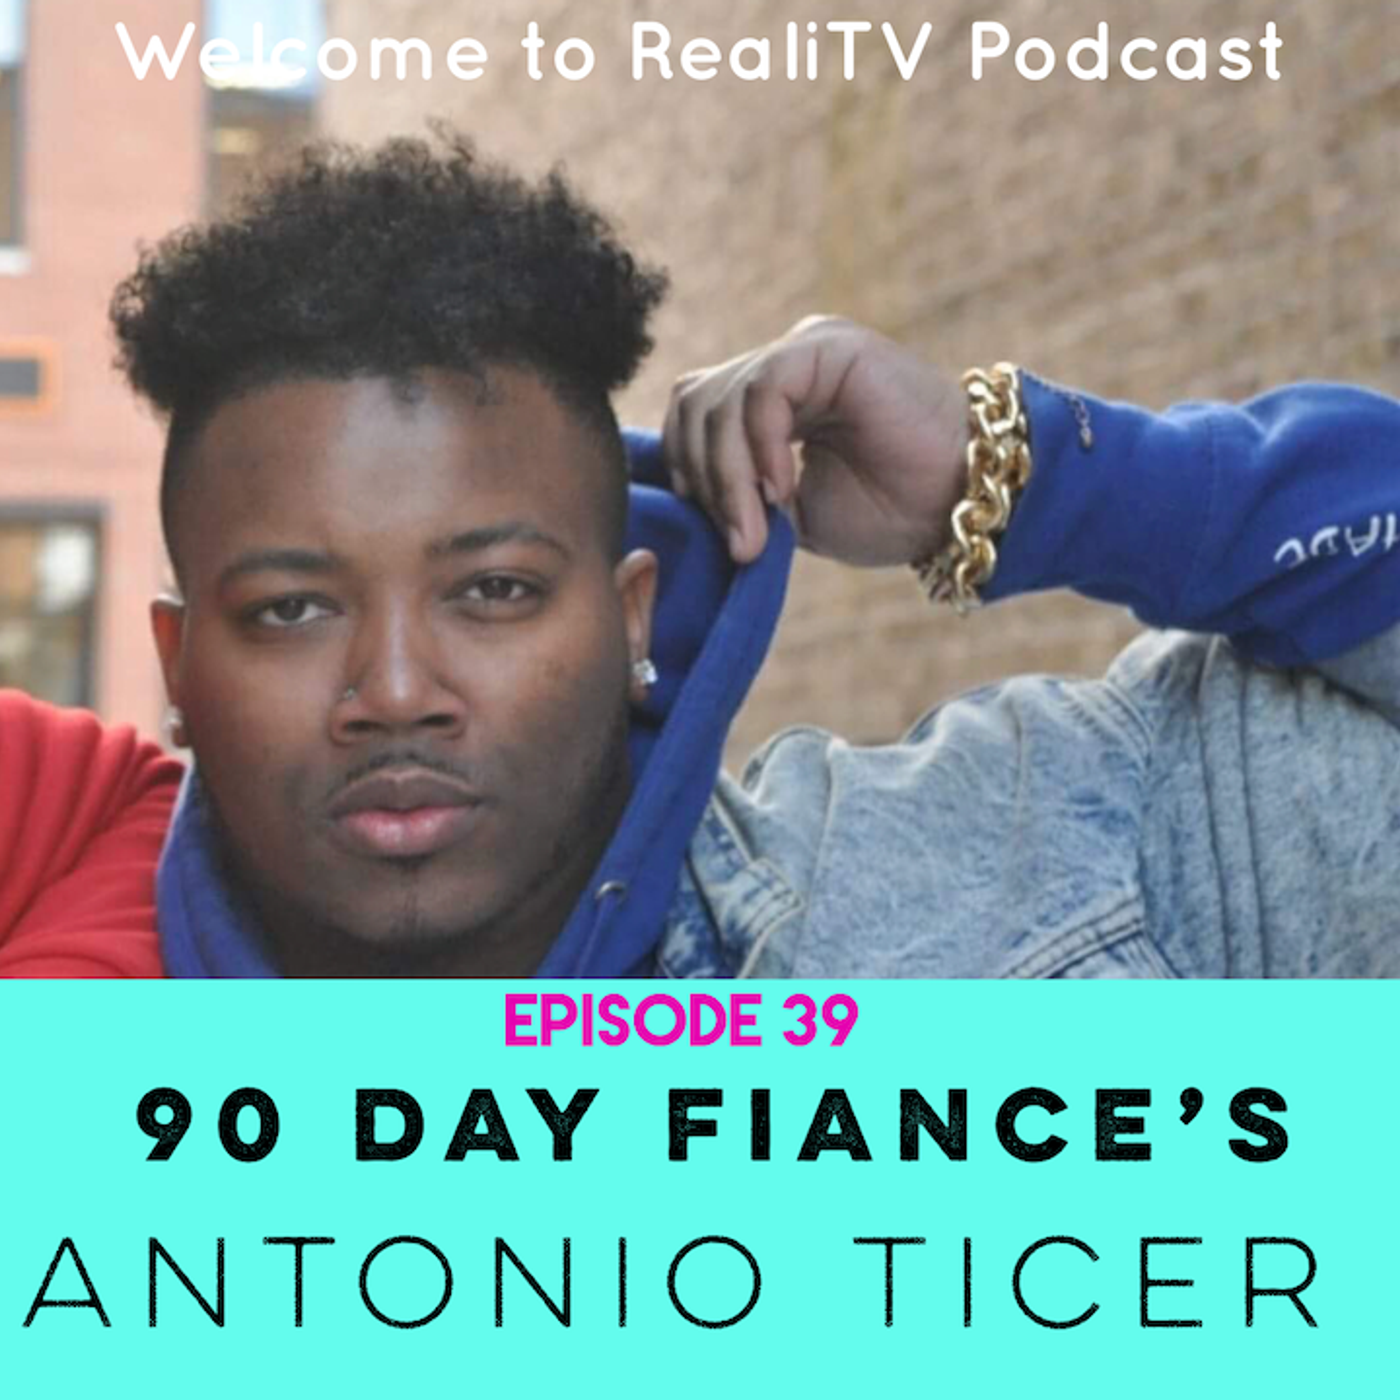 Episode 39: 90 Day Fiance’s Antonio Ticer!